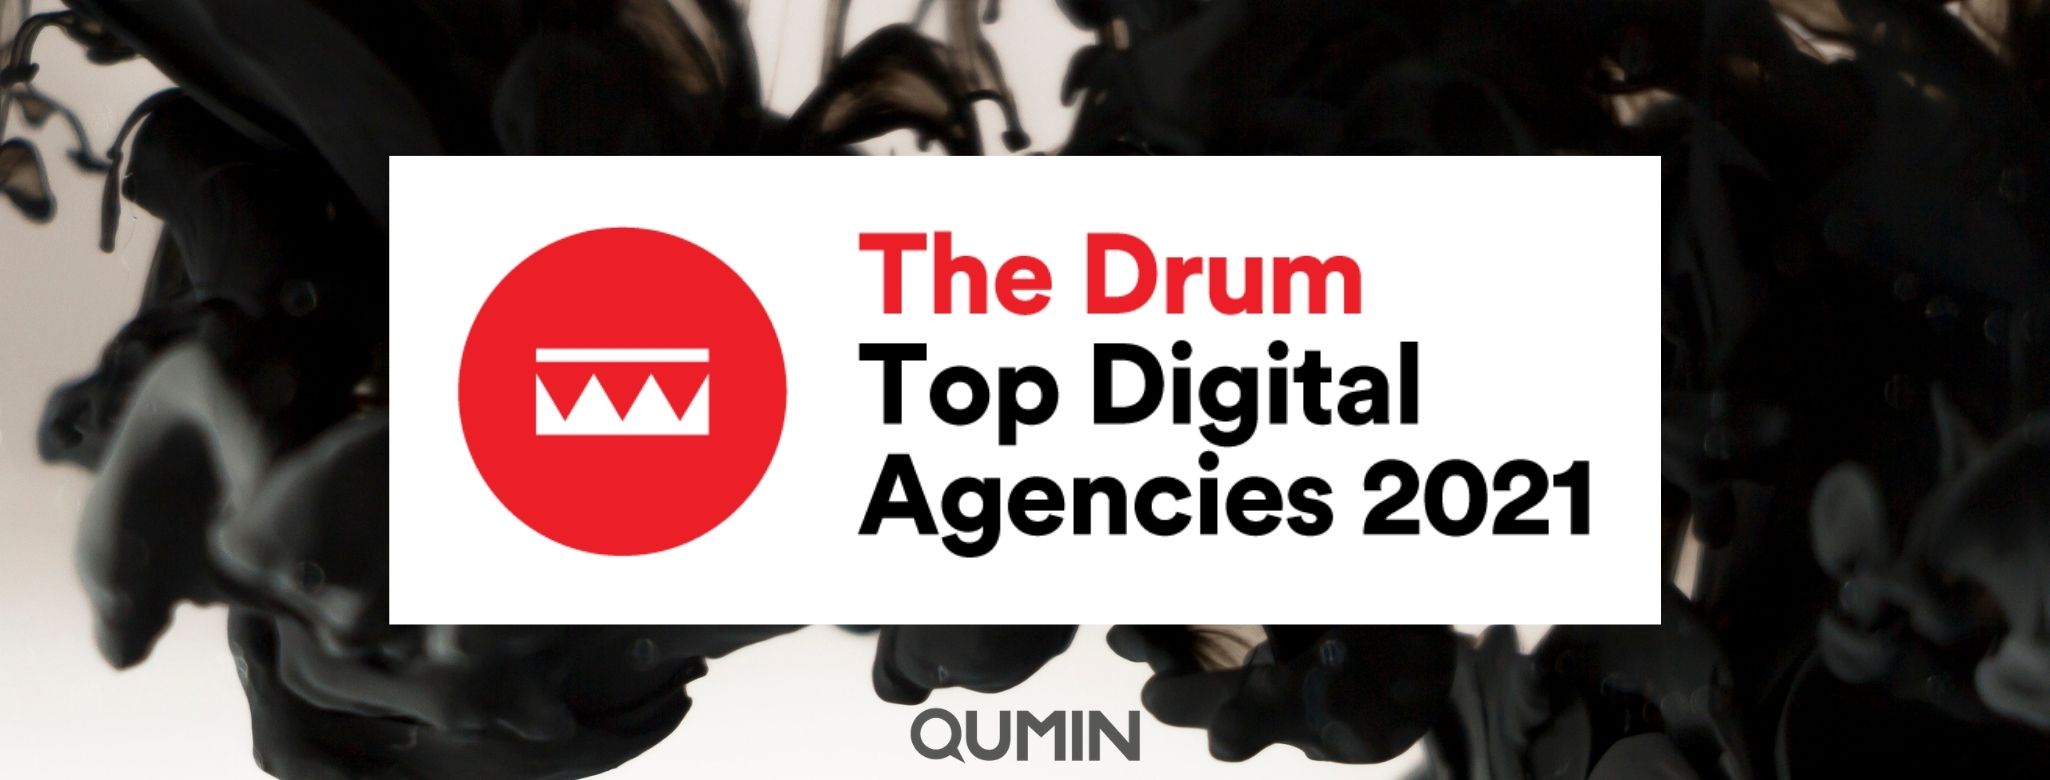 Qumin in The Drum's Top Digital Agencies 2021